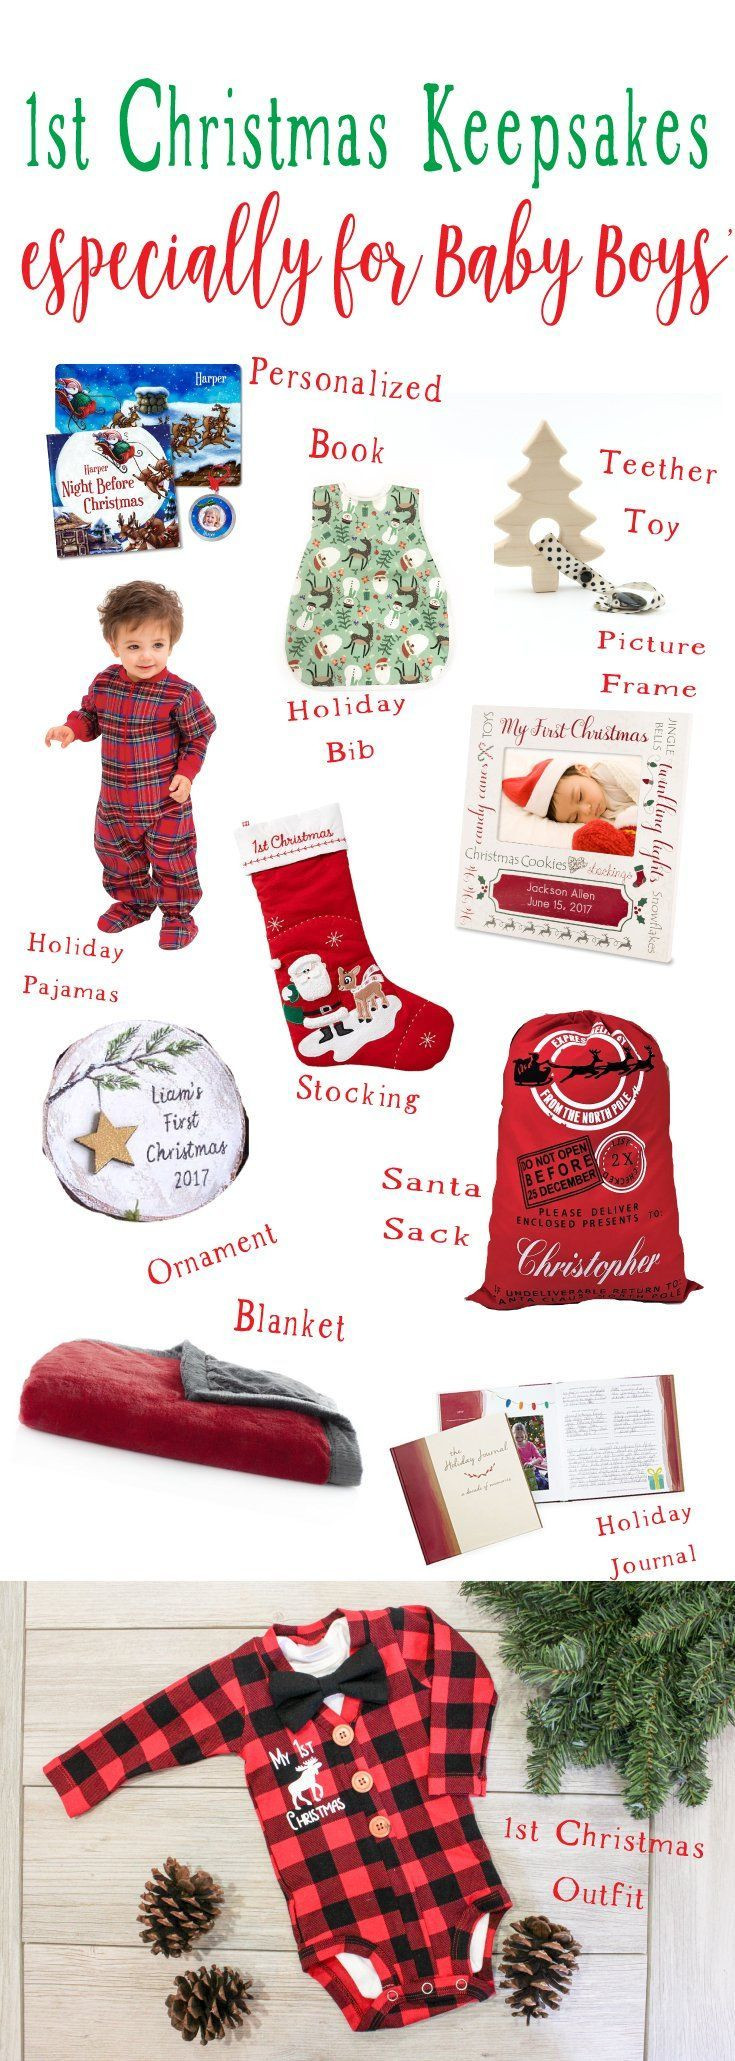 Baby'S 1St Christmas Gift Ideas
 Baby Boy 1st Christmas Keepsake Ideas